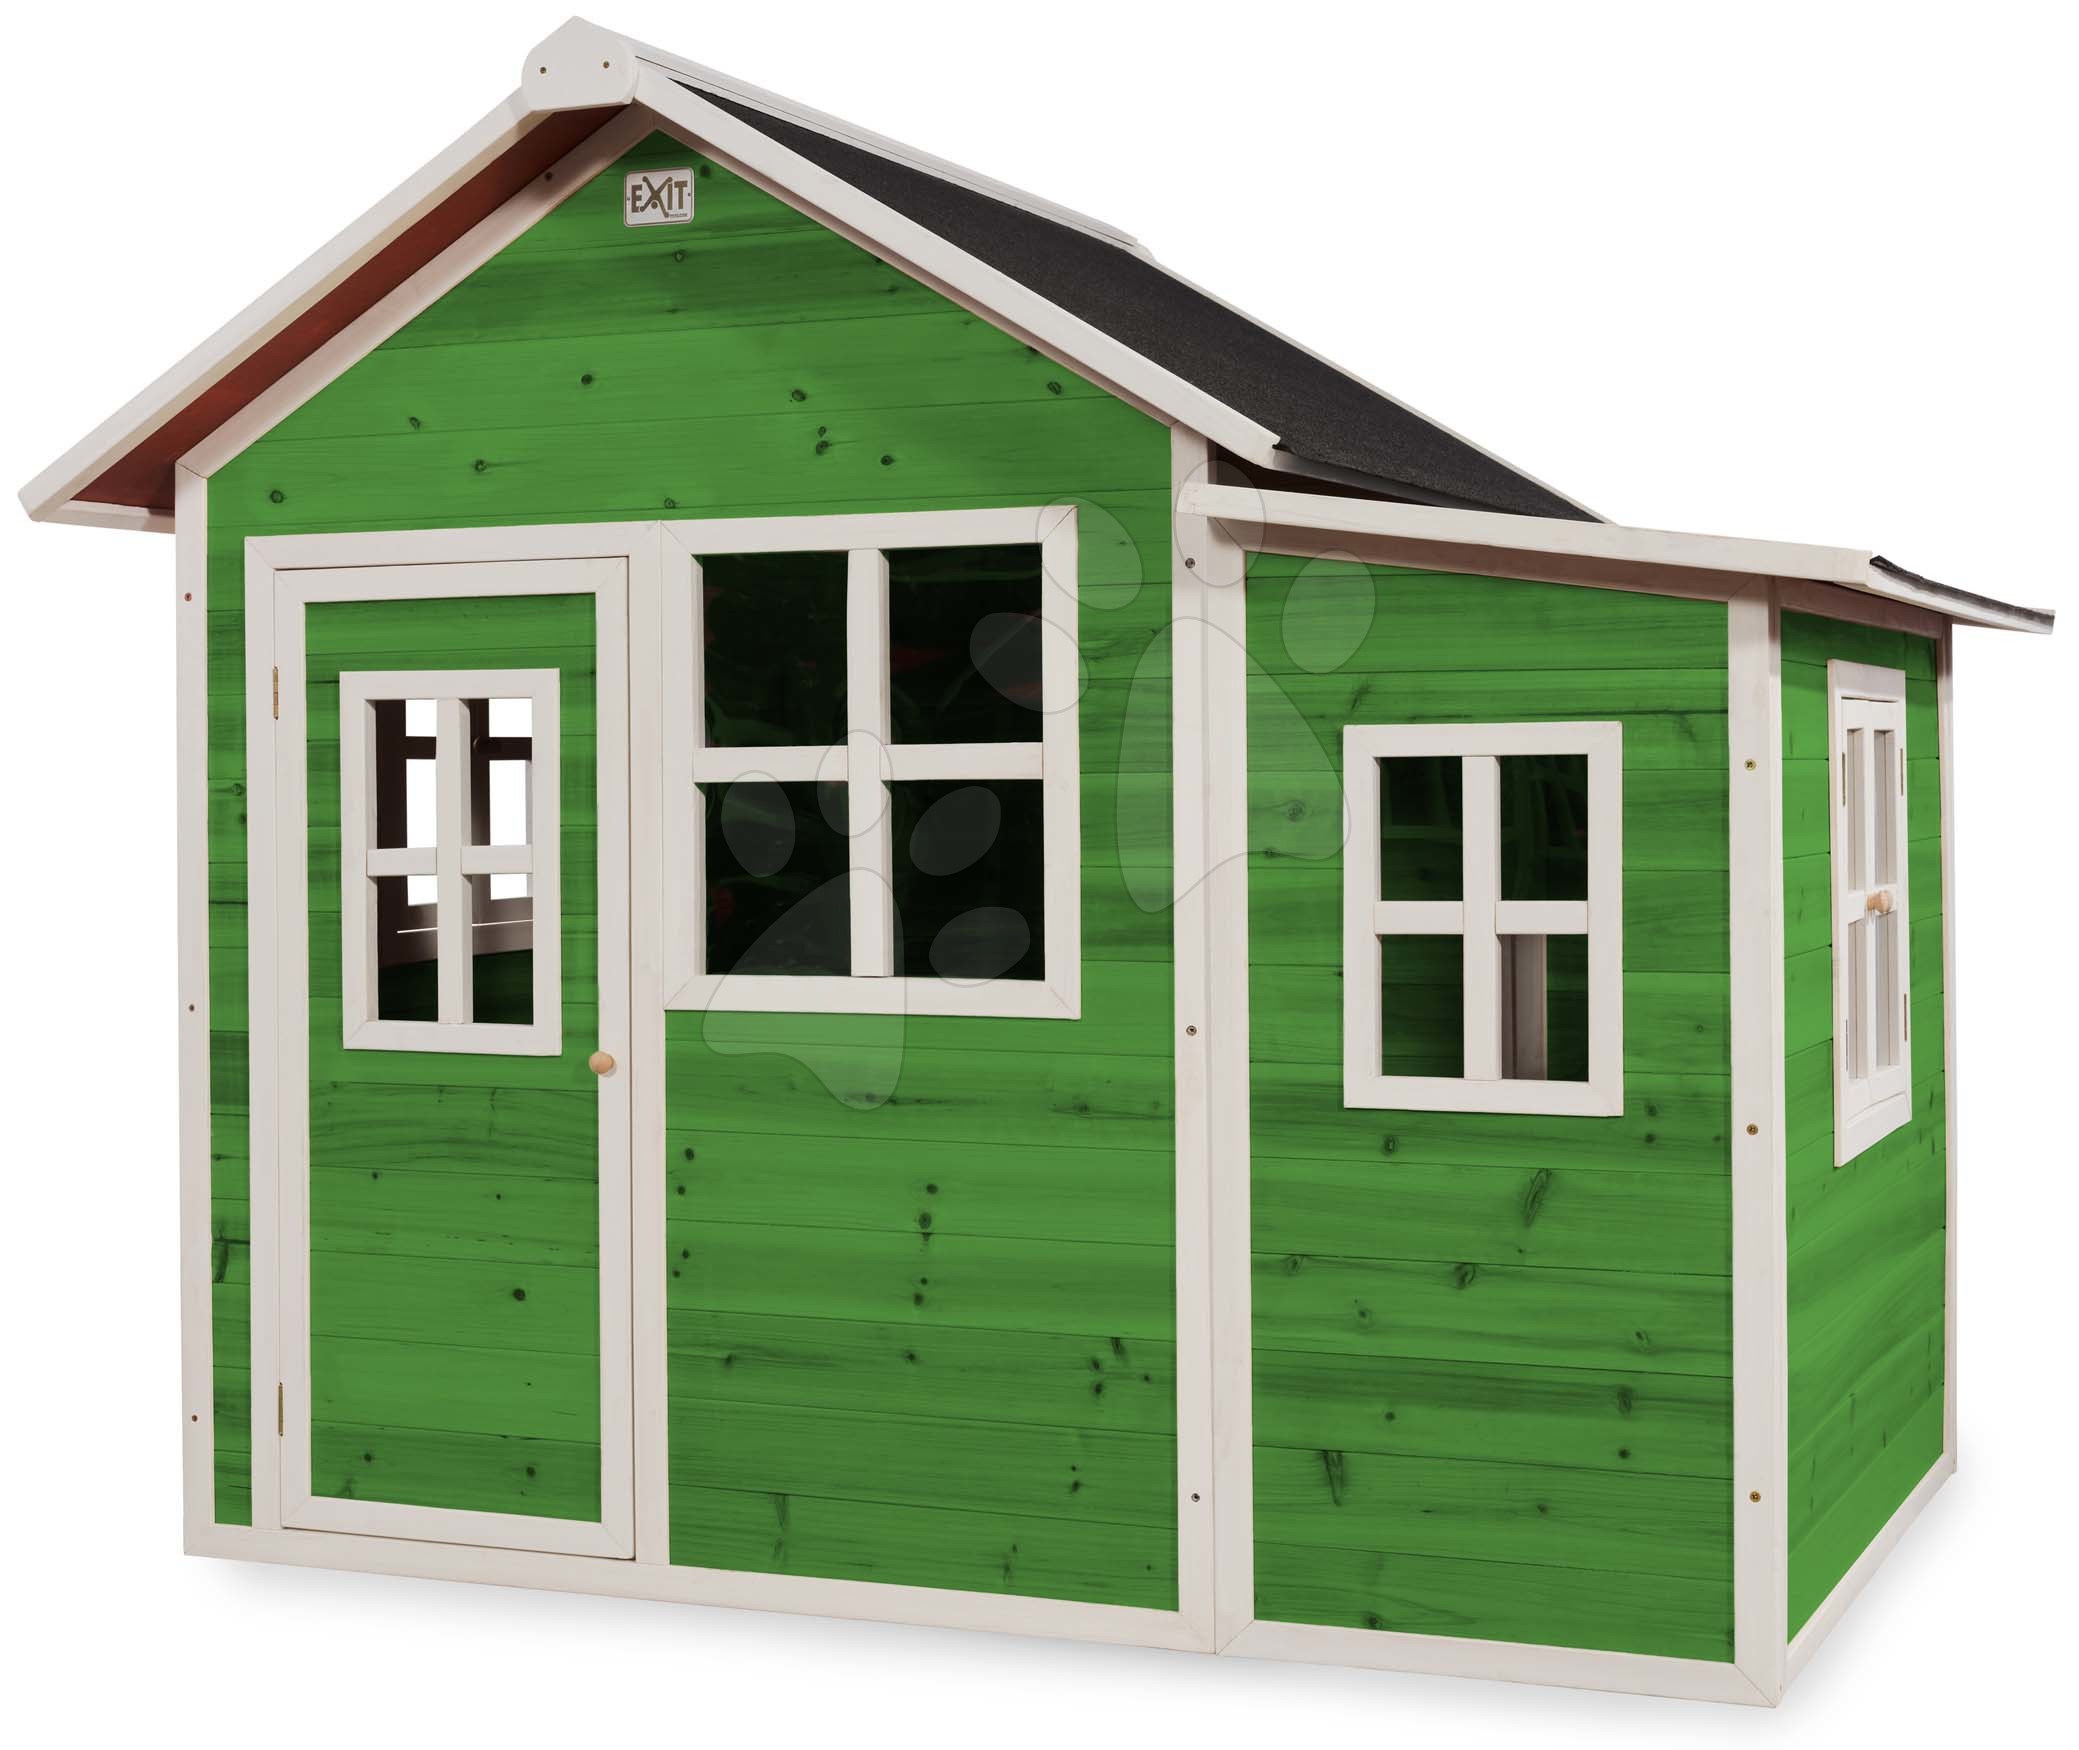 Domček cédrový Loft 150 Green Exit Toys veľký s vodeodolnou strechou zelený